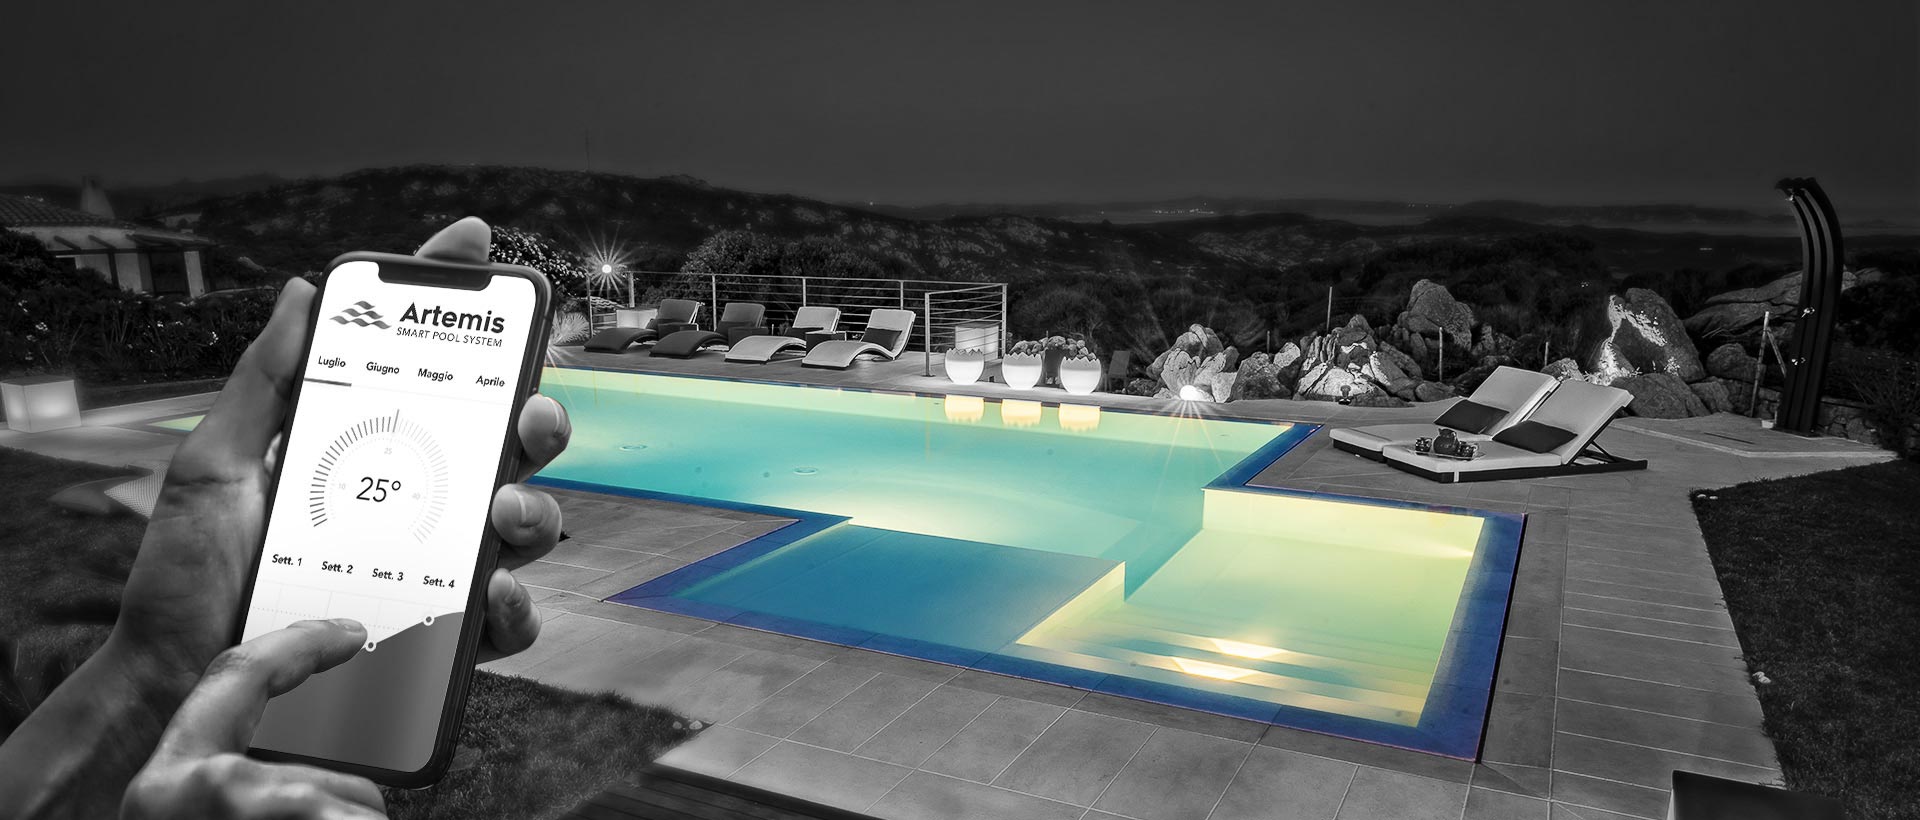 notte-smartpool-piscina